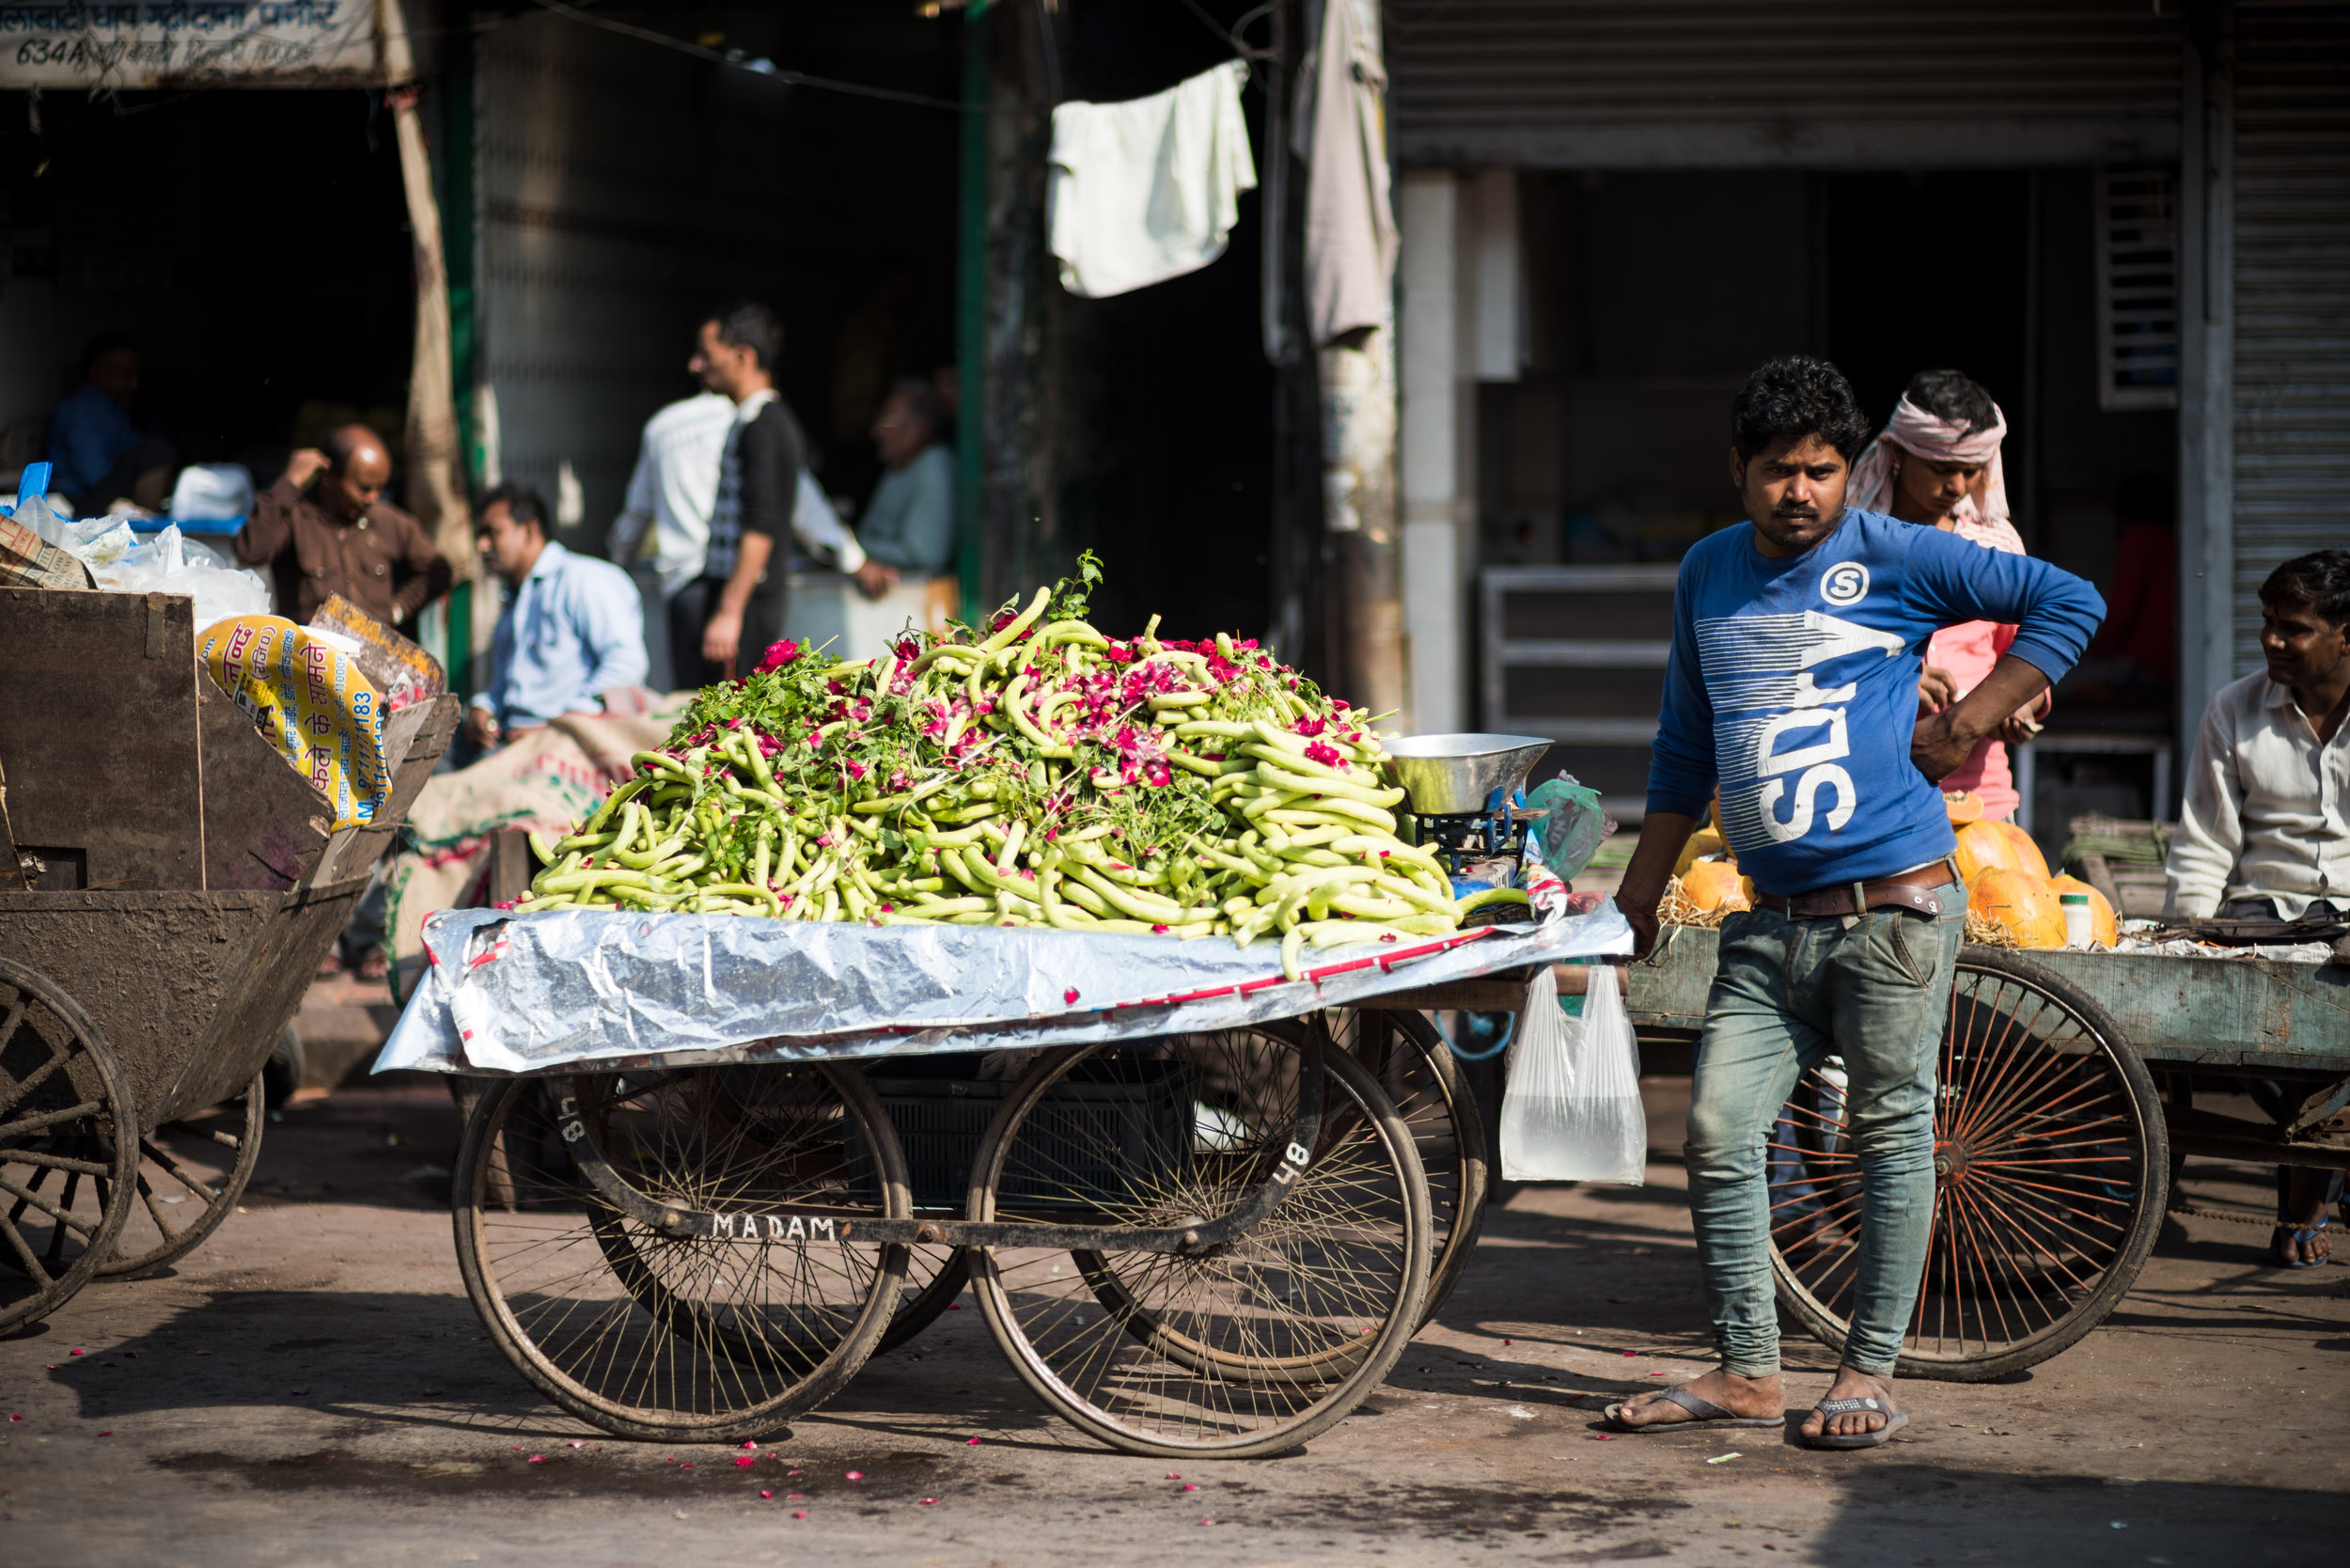  Spice market, Delhi 